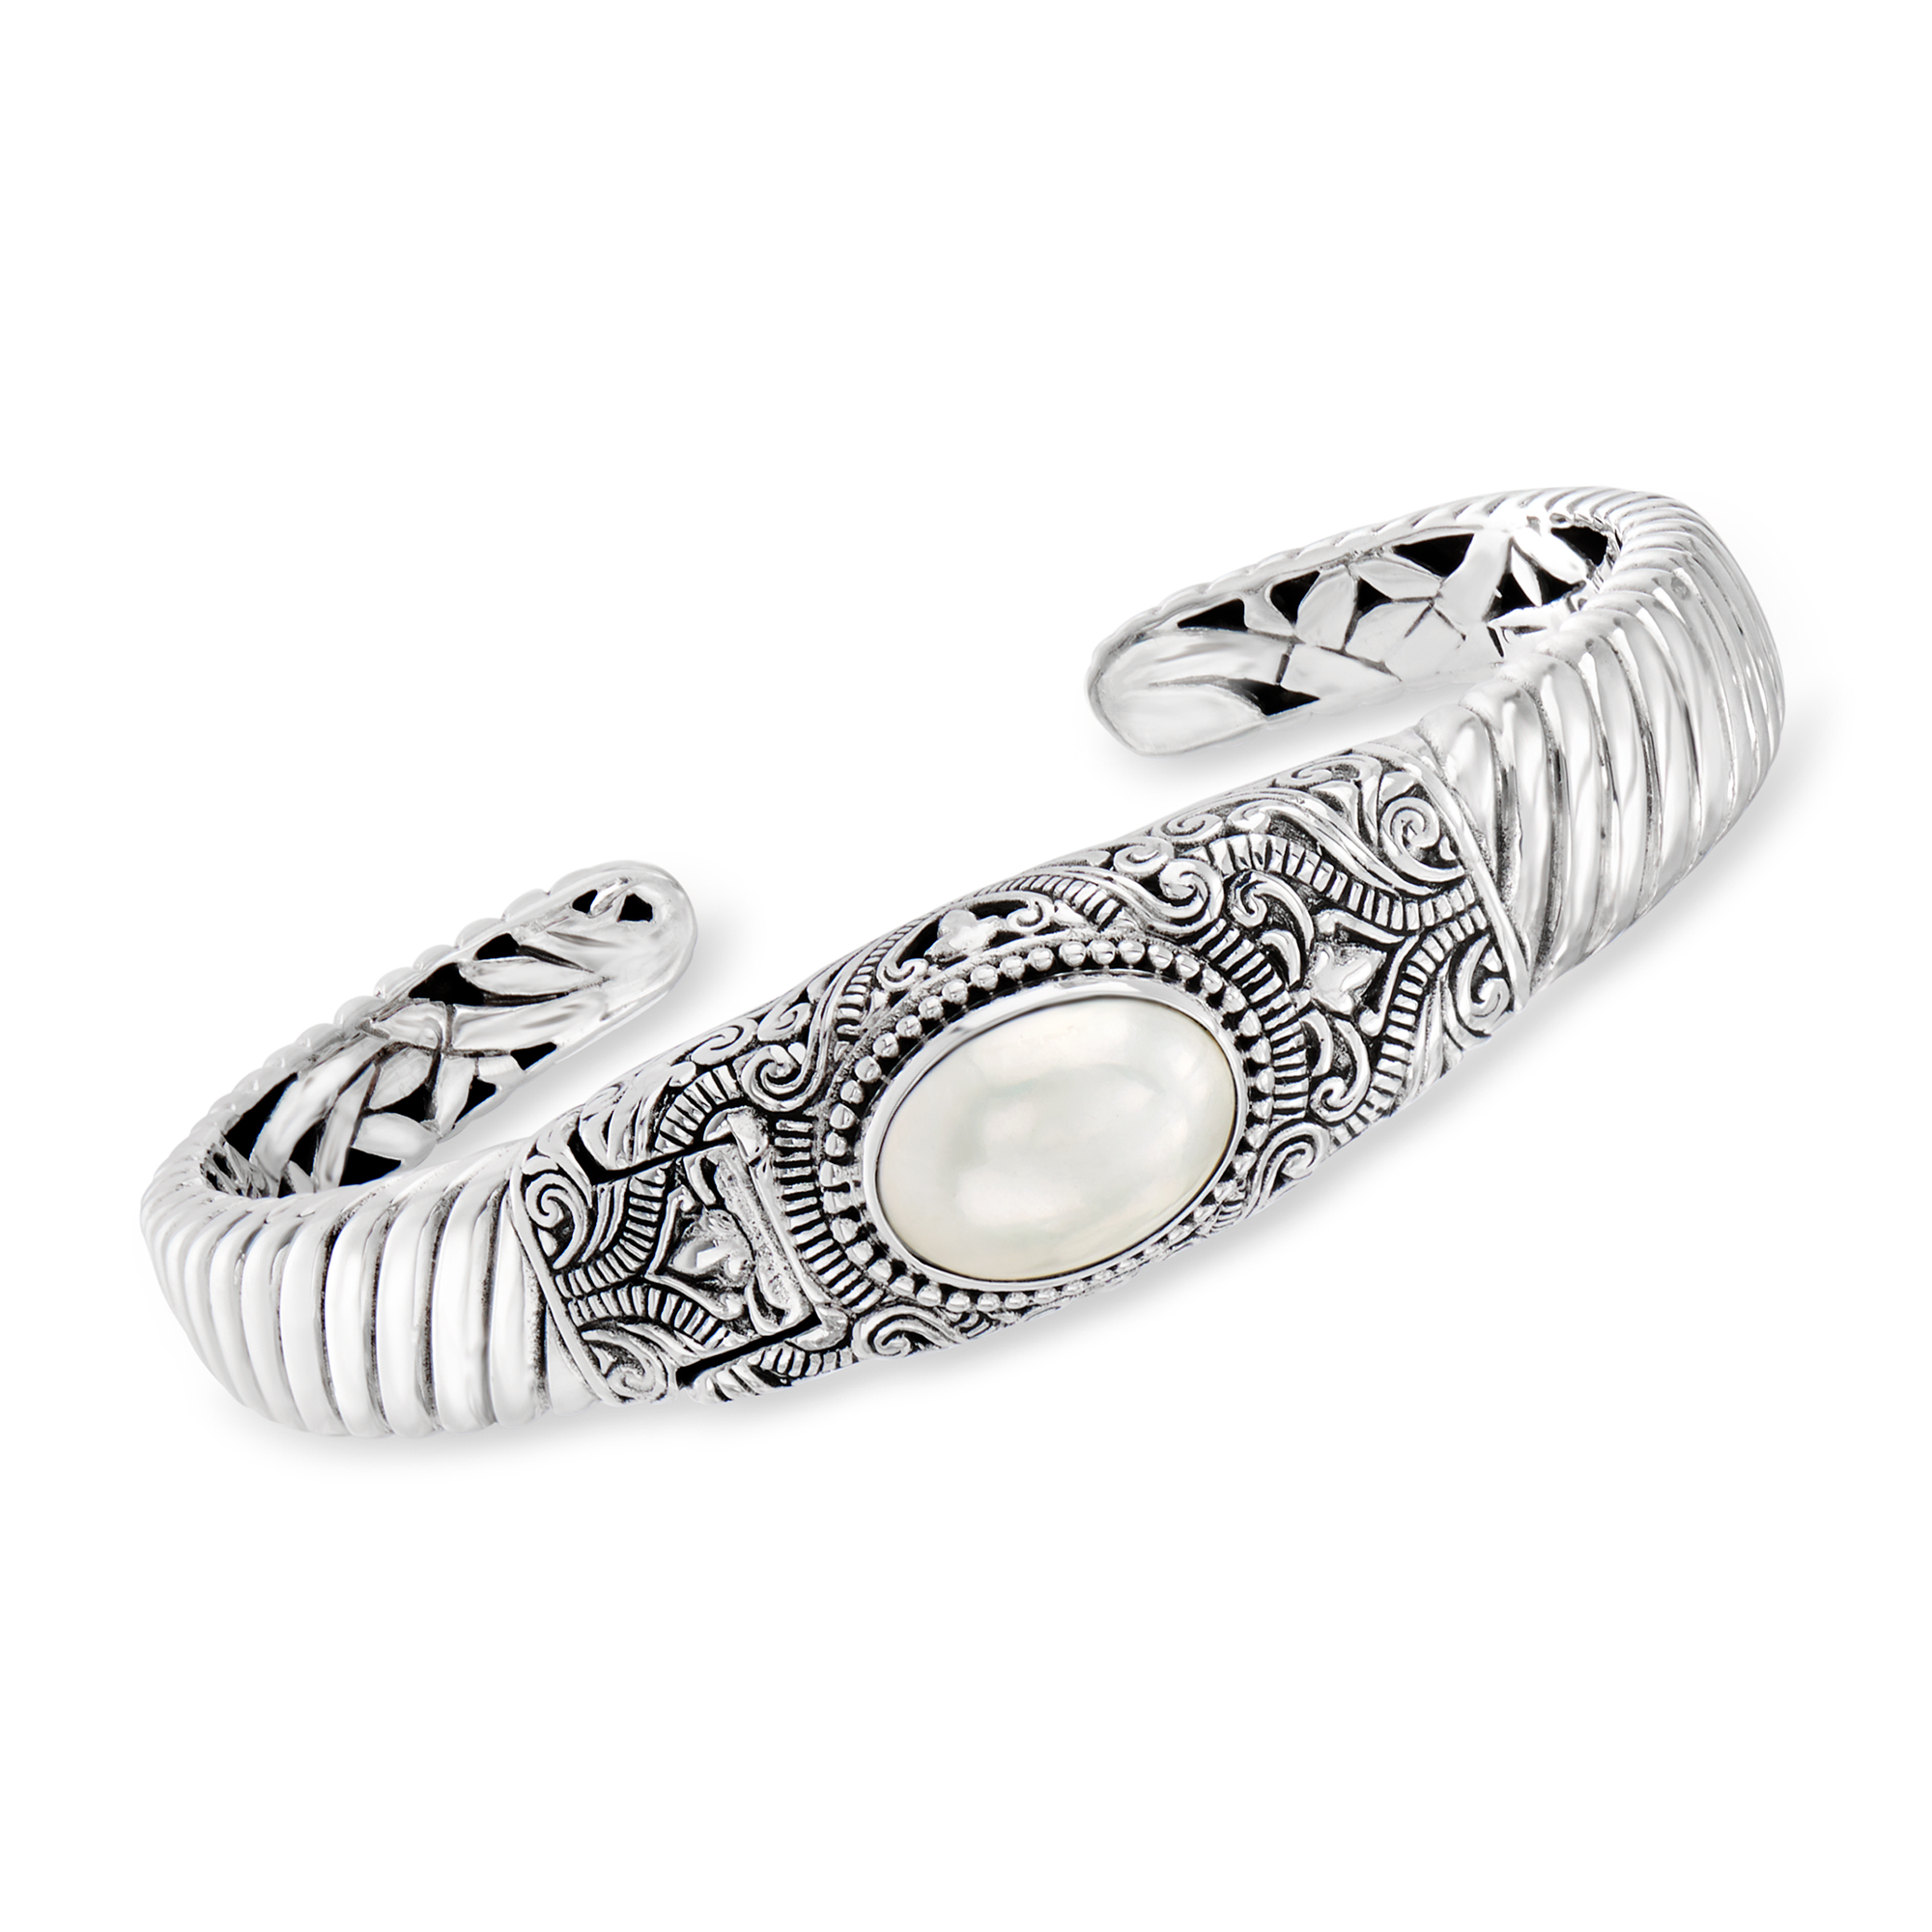 Sterling Silver Braided Wristband Bracelet from Bali - Distinctive Style |  NOVICA